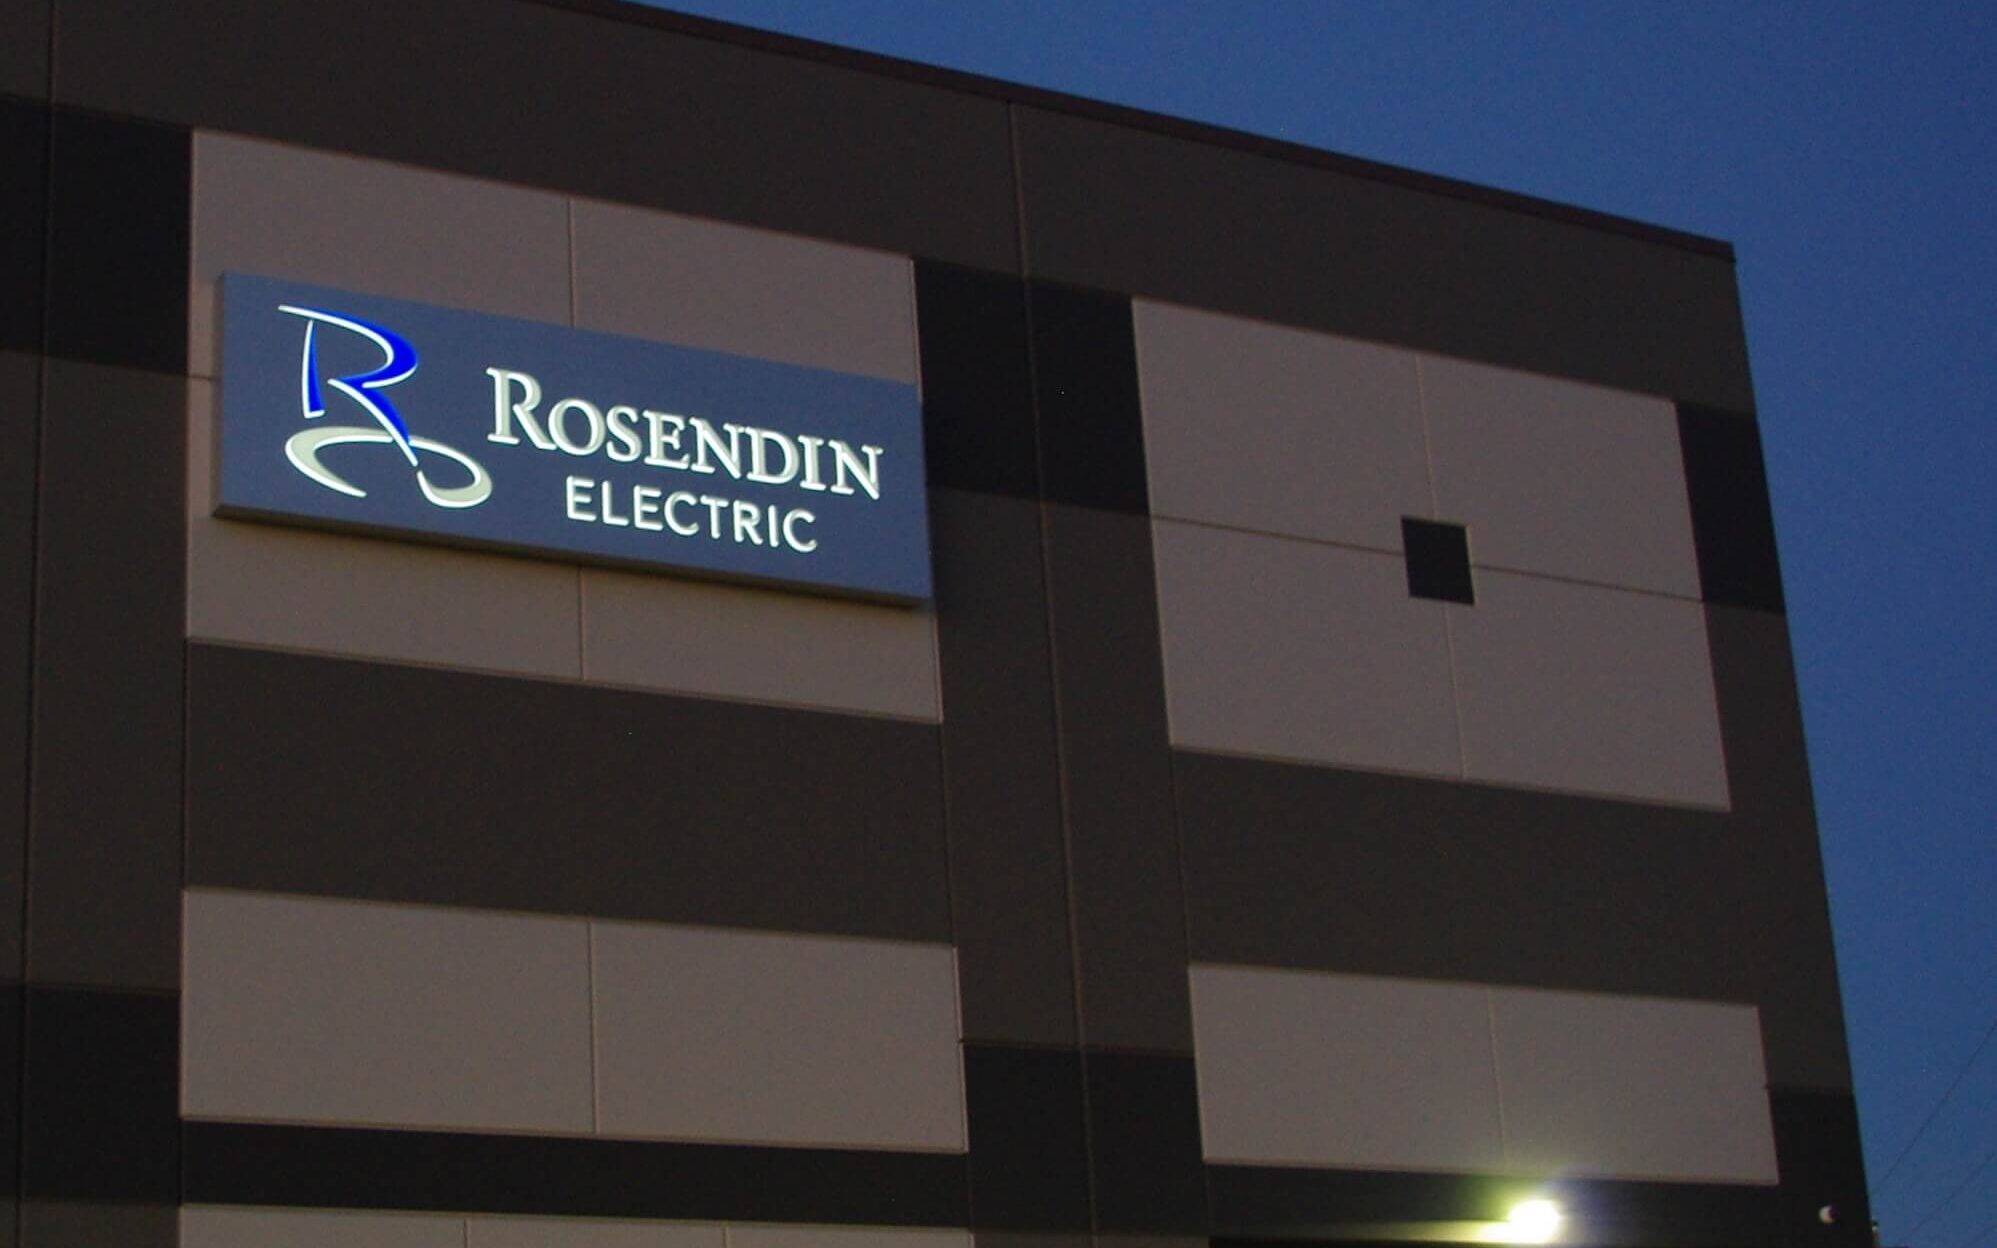 Exterior view of Rosendin Electric building / Wikimedia Commons / M.O. Stevens
Link: https://commons.wikimedia.org/wiki/File:Rosendin_Electric_-_Hillsboro,_Oregon.jpg